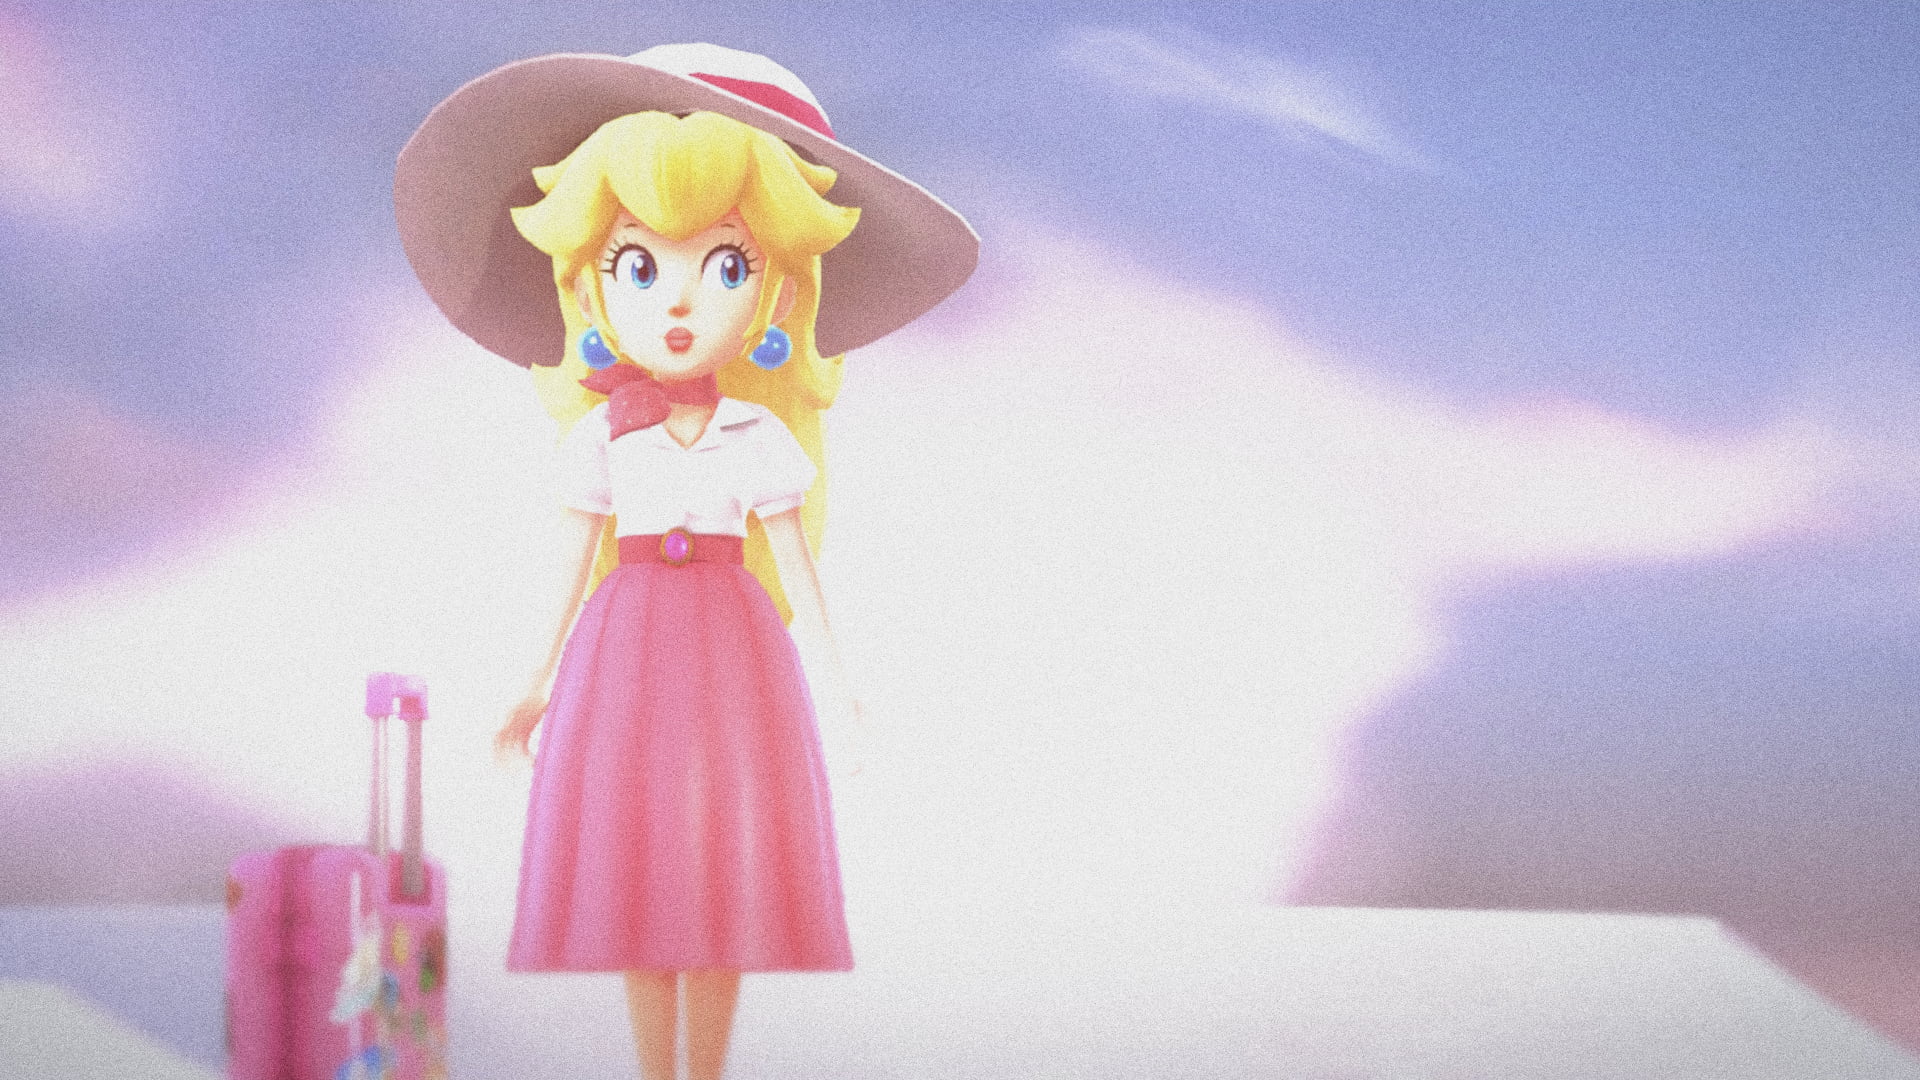 Free download | HD wallpaper: Super Mario Odyssey, Princess Peach ...